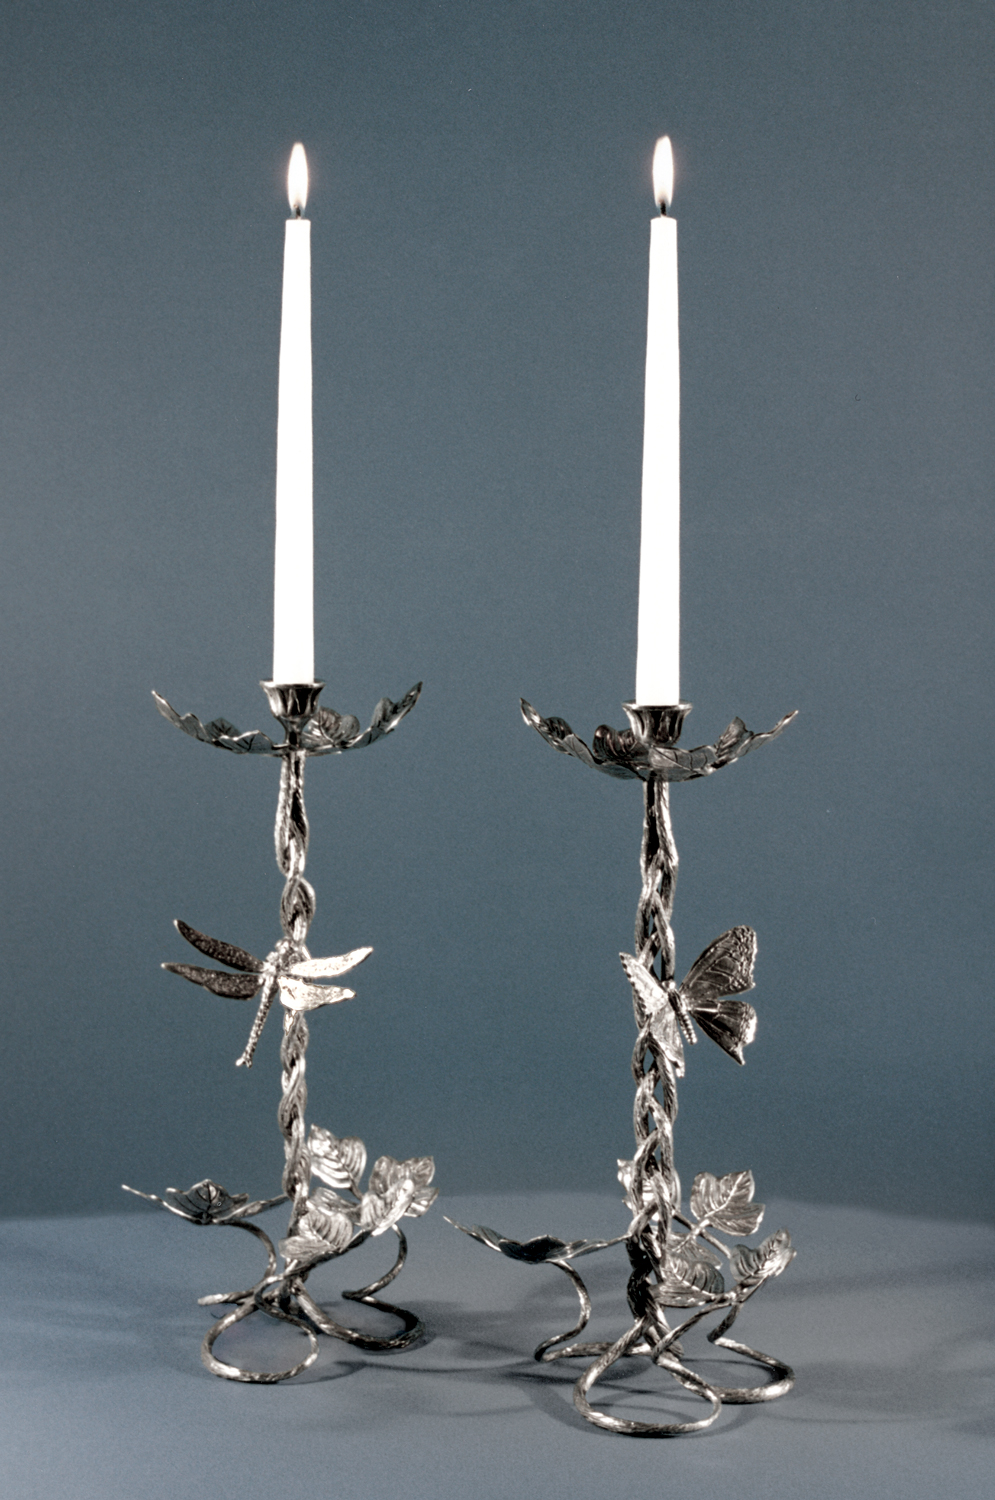 Tall Braided Kudzu Candle Holders by Charles H. Reinike III